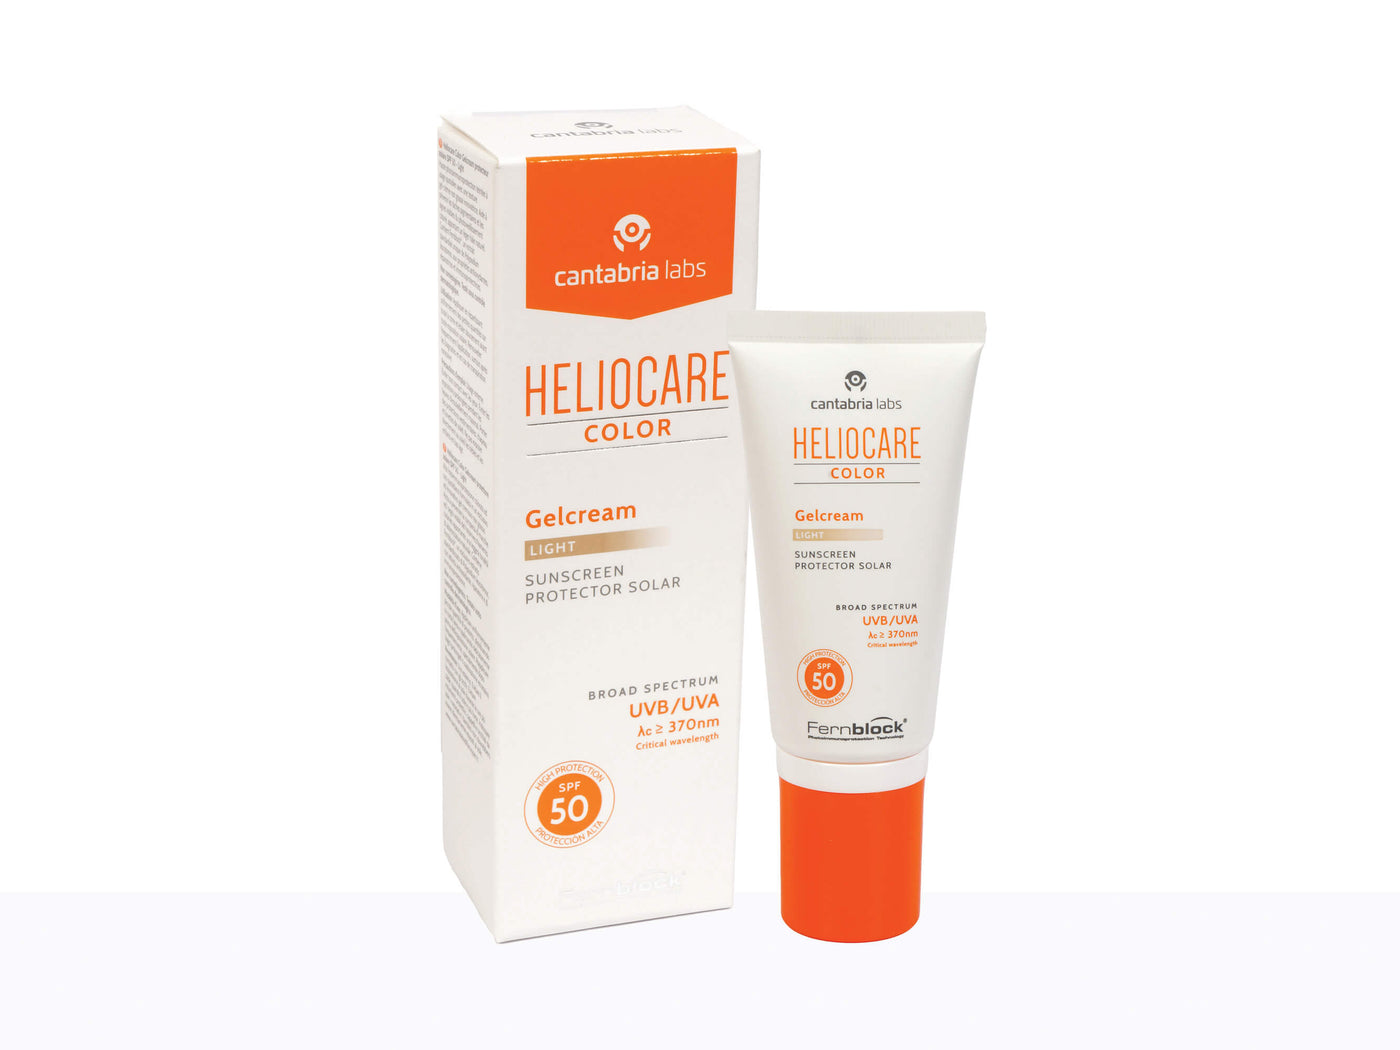 Heliocare Color Sunscreen Protector Solar Gelcream SPF 50